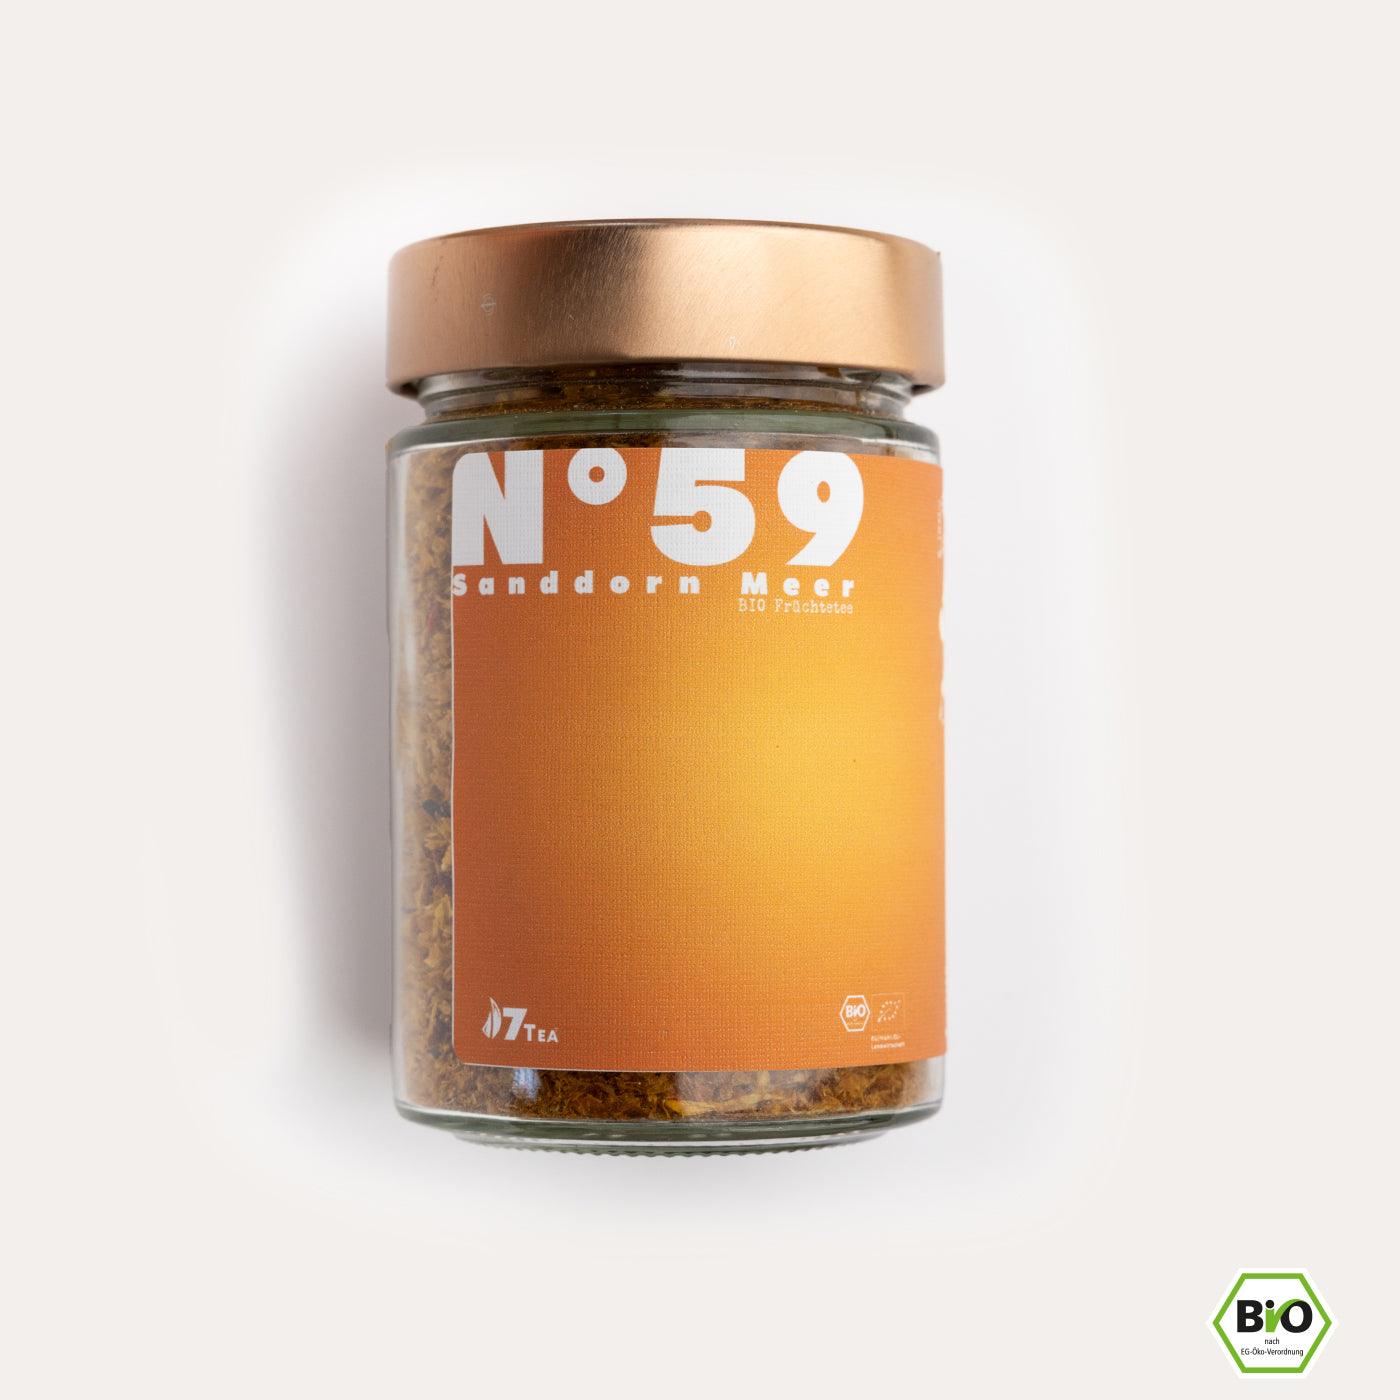 N°59 | Sanddorn Meer - Sanddorn, Orange & Blutorange - 7Tea® Bio-Tee Onlineshop